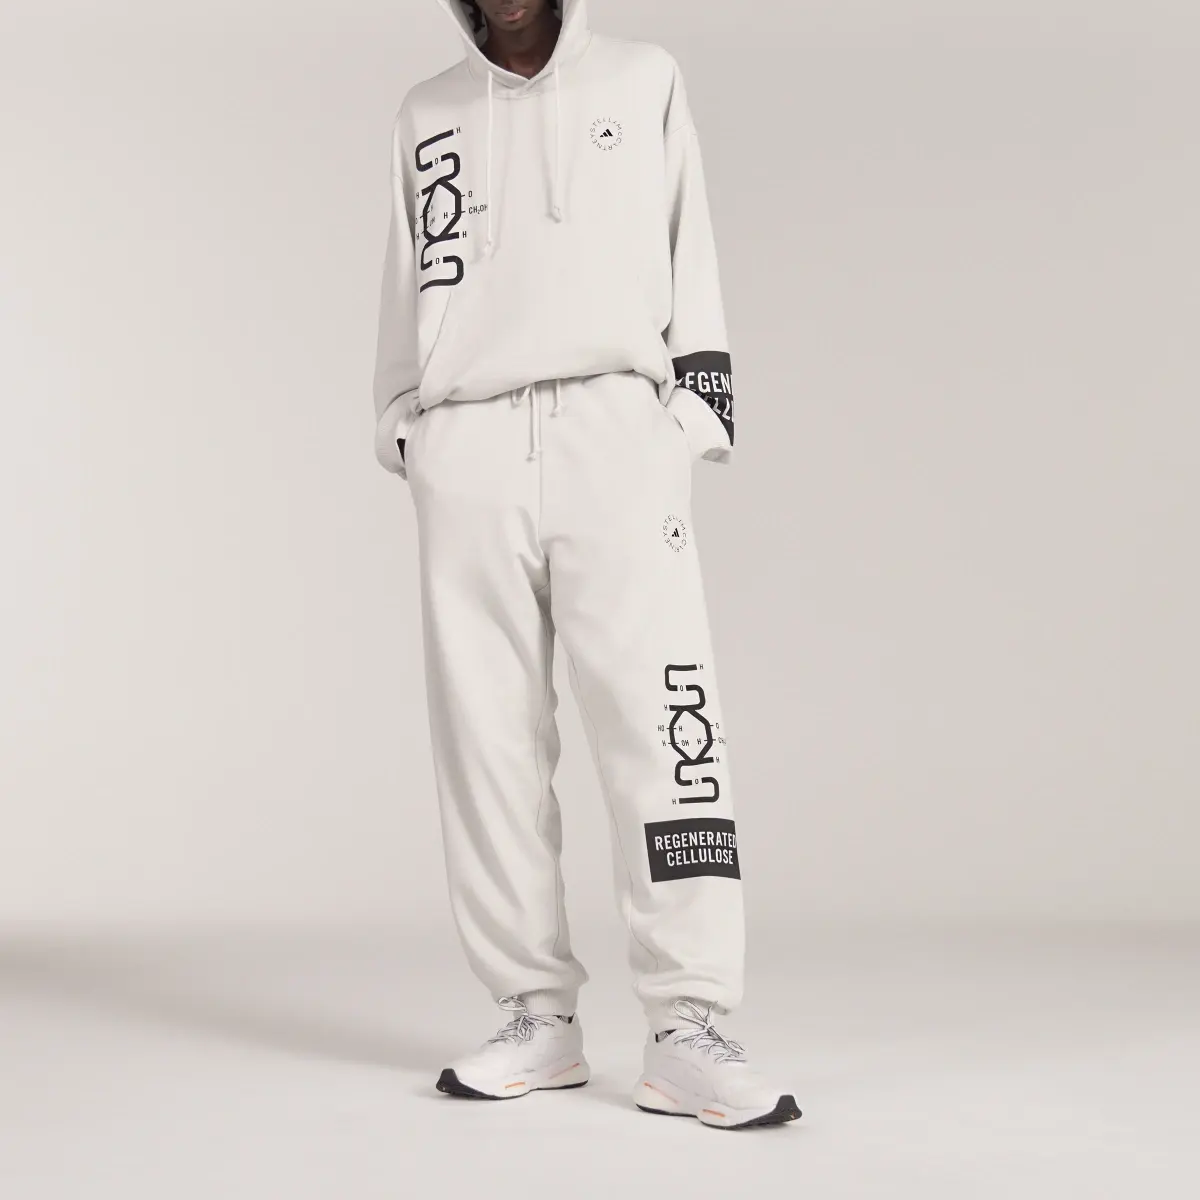 Adidas by Stella McCartney Sportswear Regenerated Cellulose Hose – Genderneutral. 2